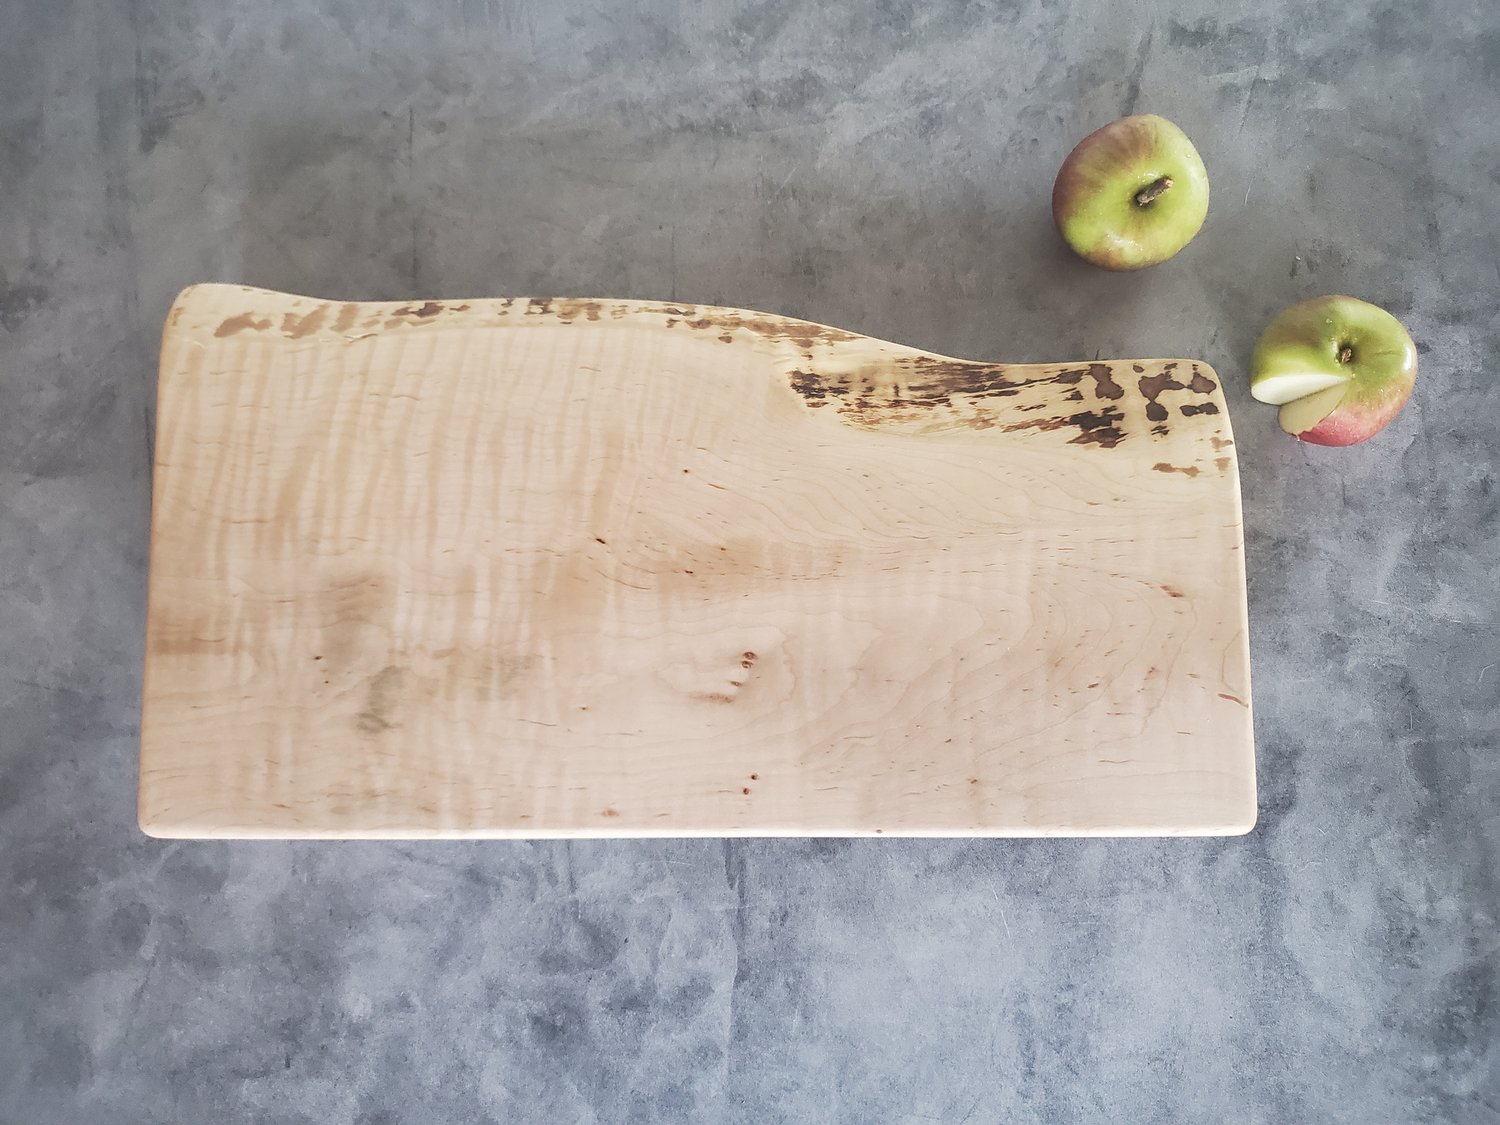 Live Edge Cutting Board Olive Wood, Handmade Rustic Wooden Serving Board